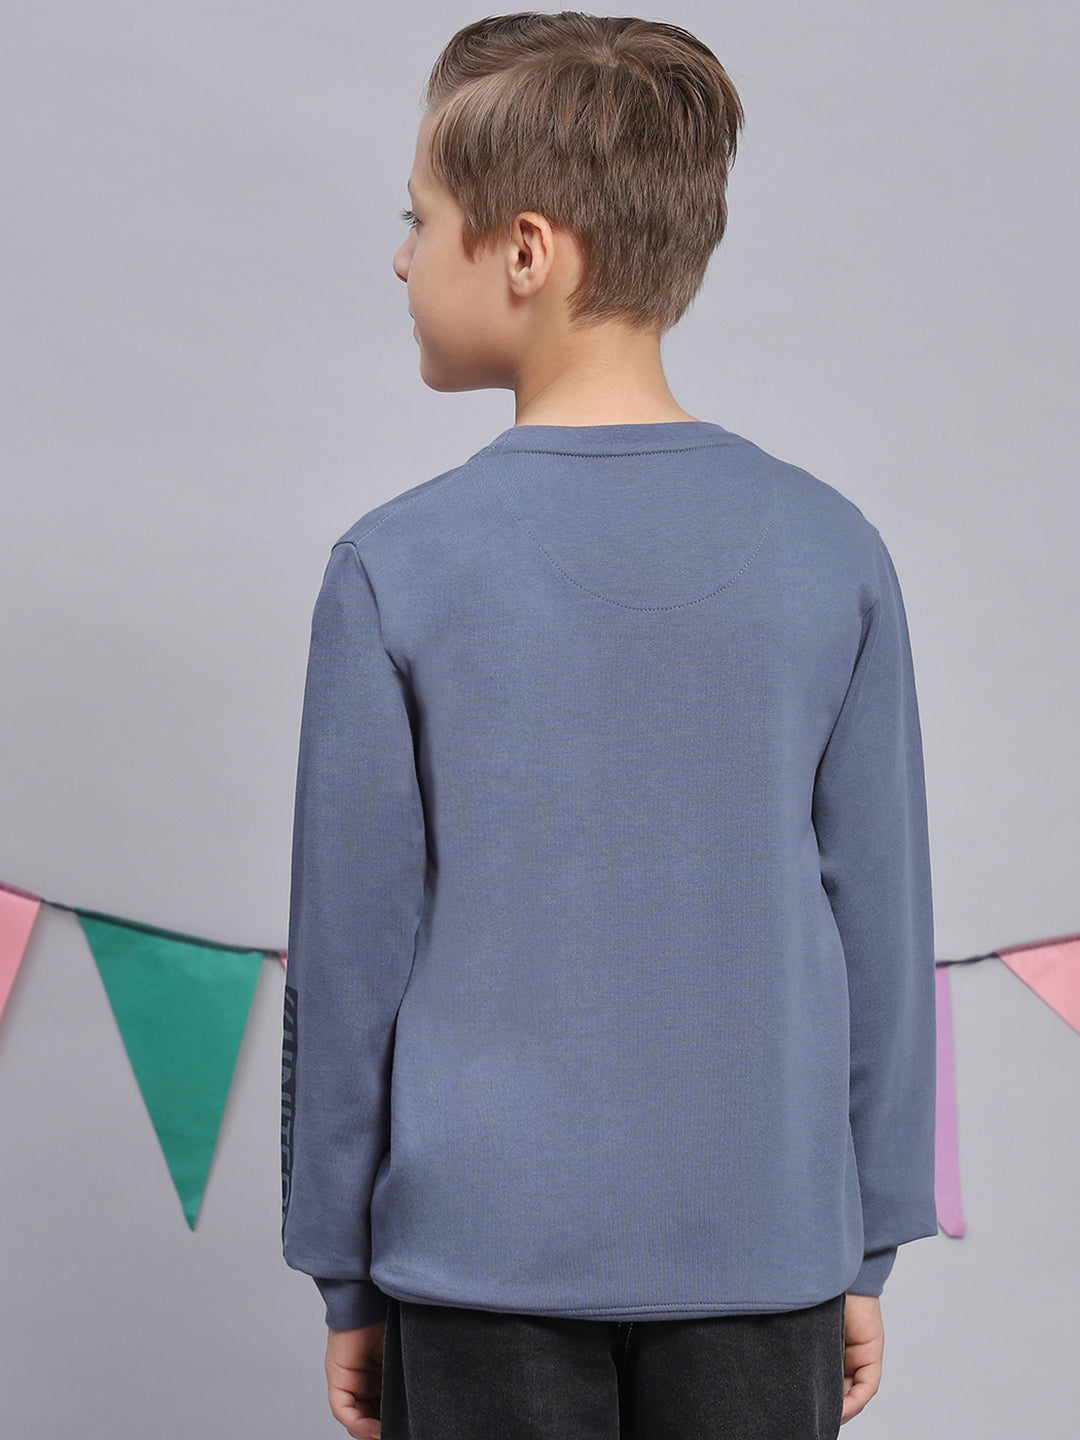 Boys Blue Printed Round Neck Full Sleeve Sweatshirt